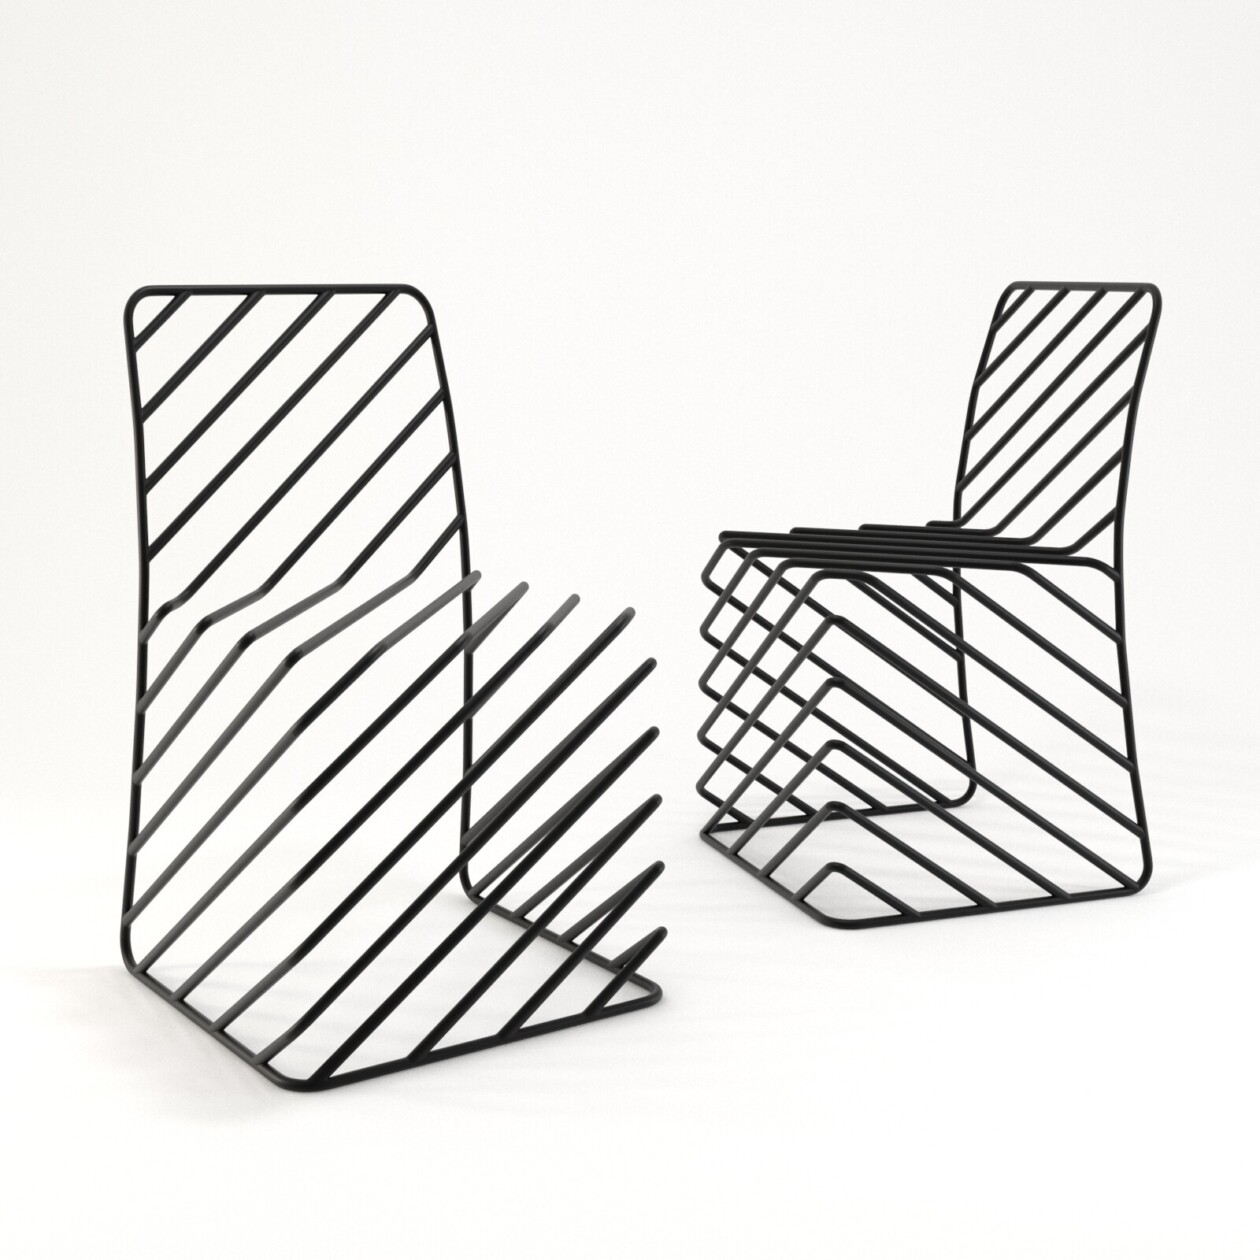 Minimalist Chair By Nendo Studio (2)